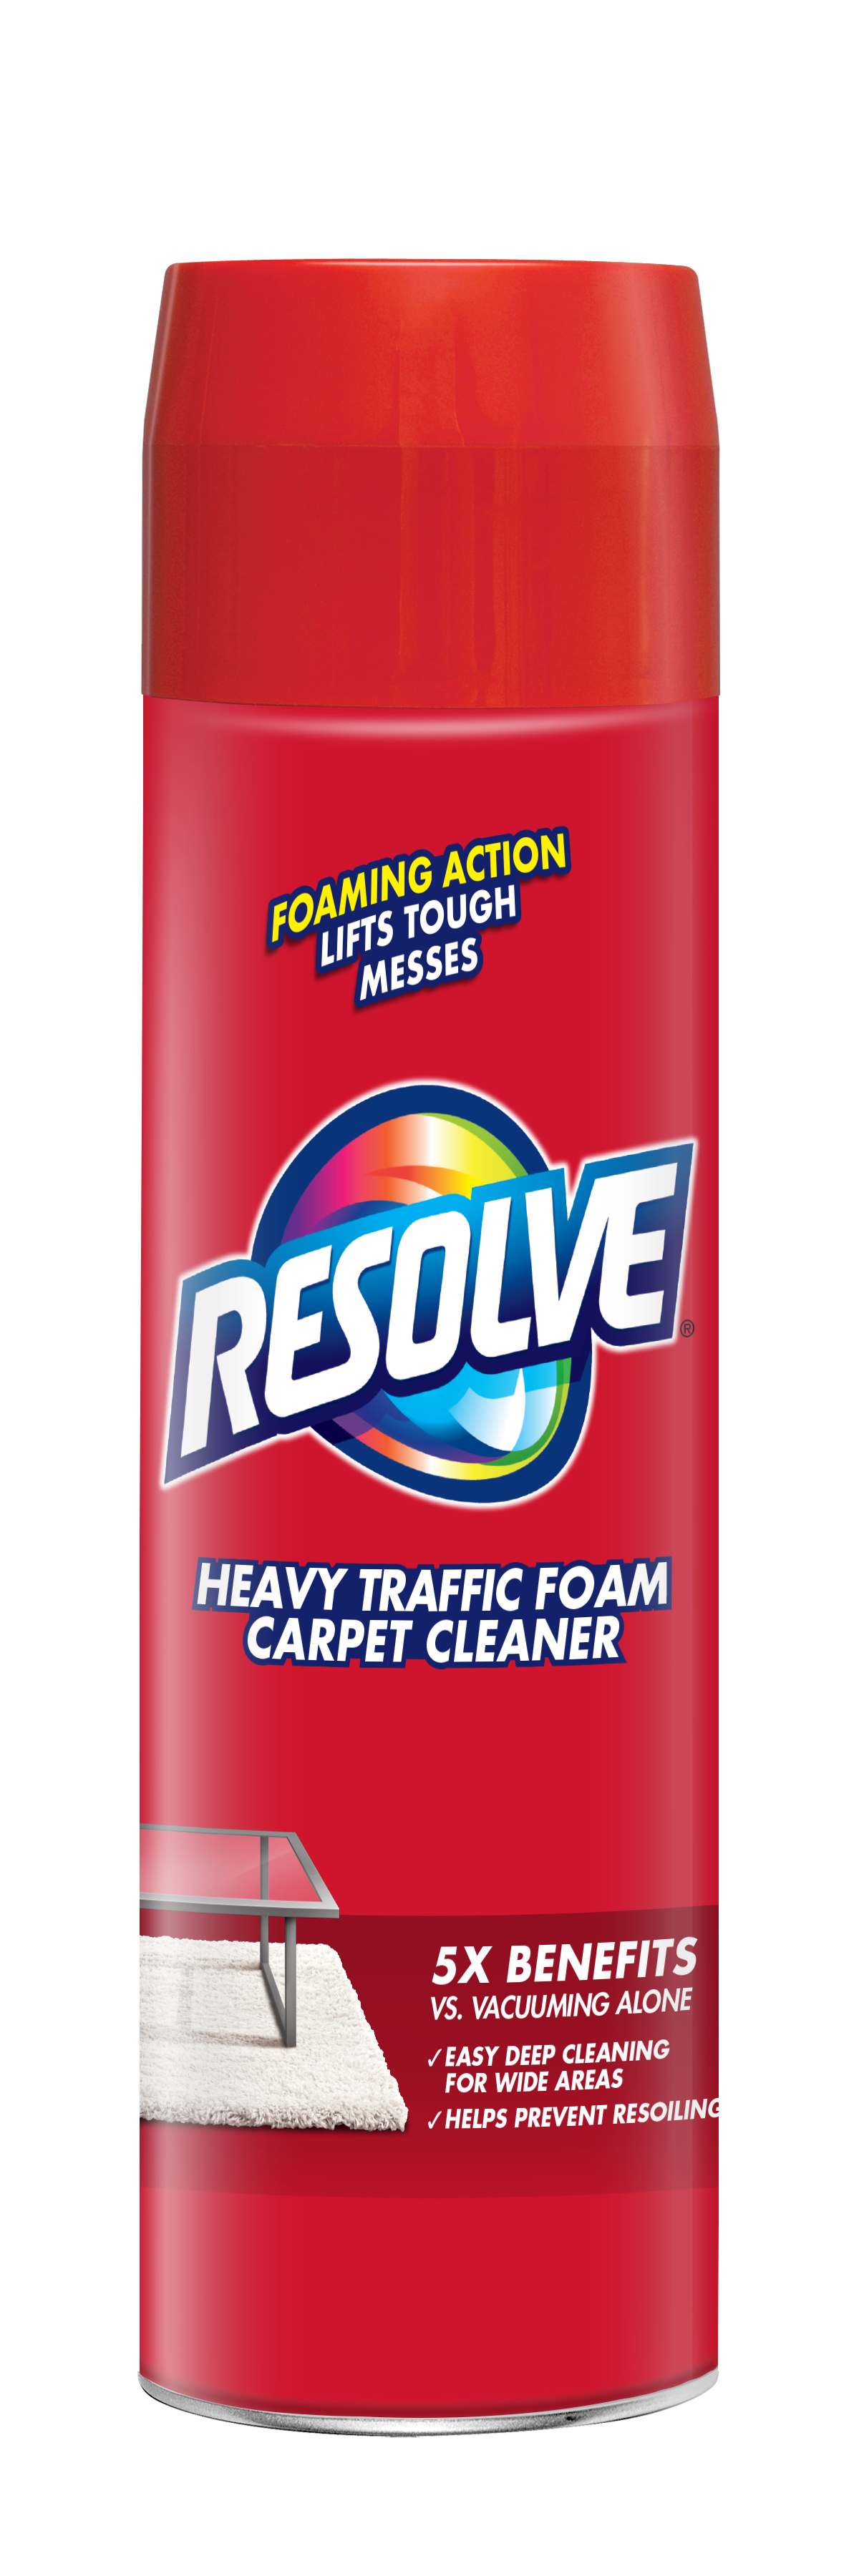 RESOLVE Heavy Traffic Foam Carpet Cleaner